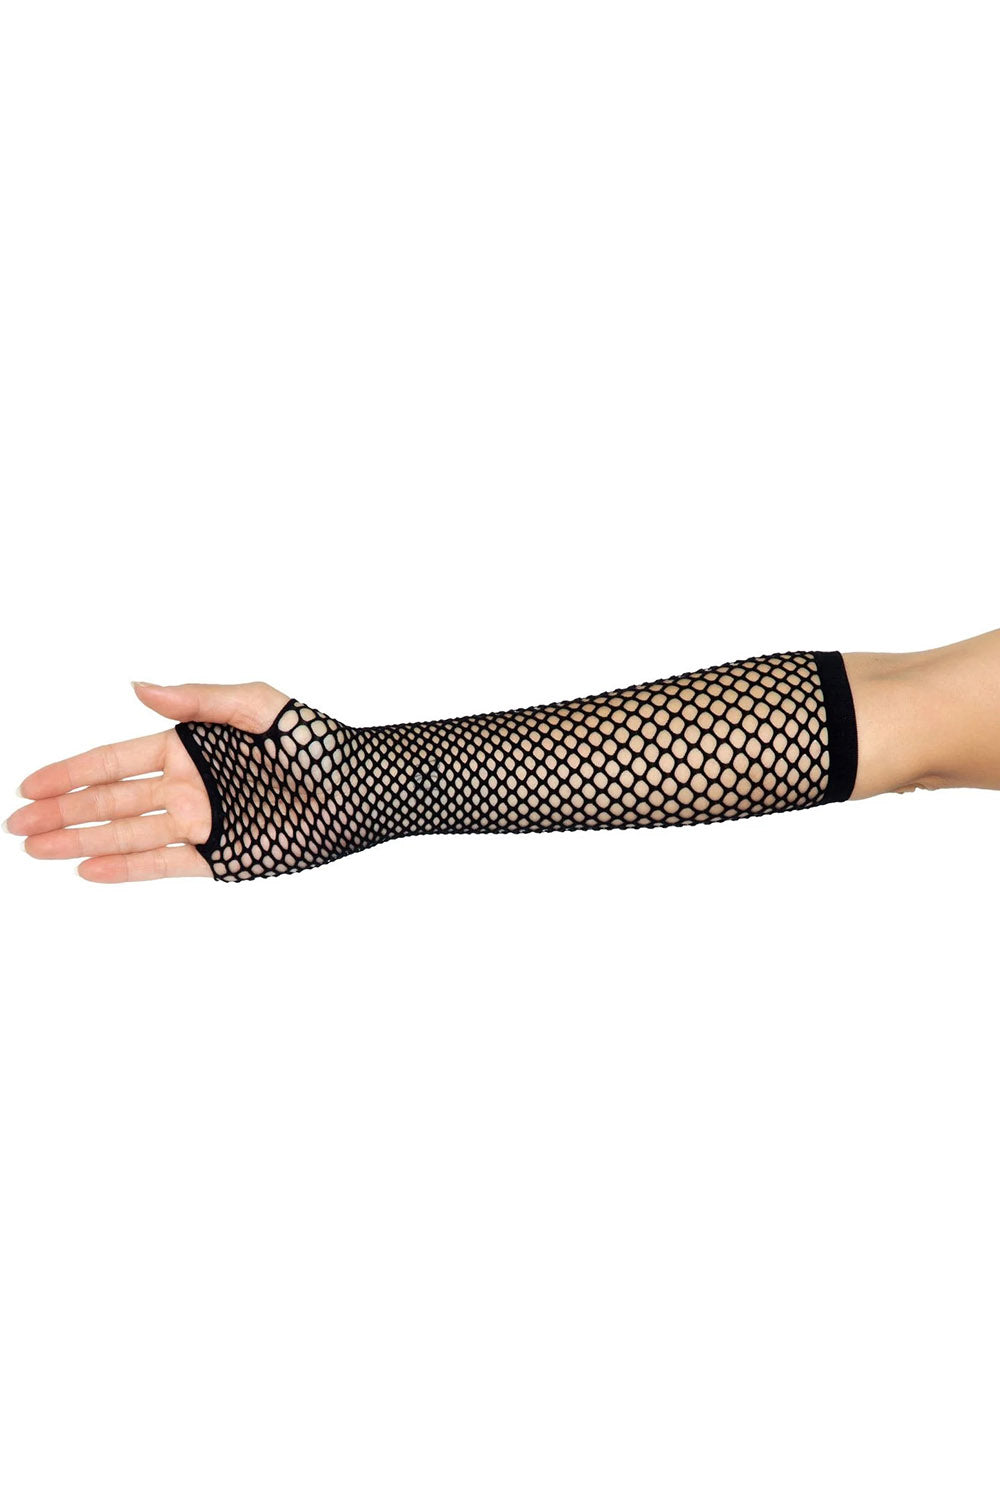 Triangle Net Fingerless Arm Warmer Gloves